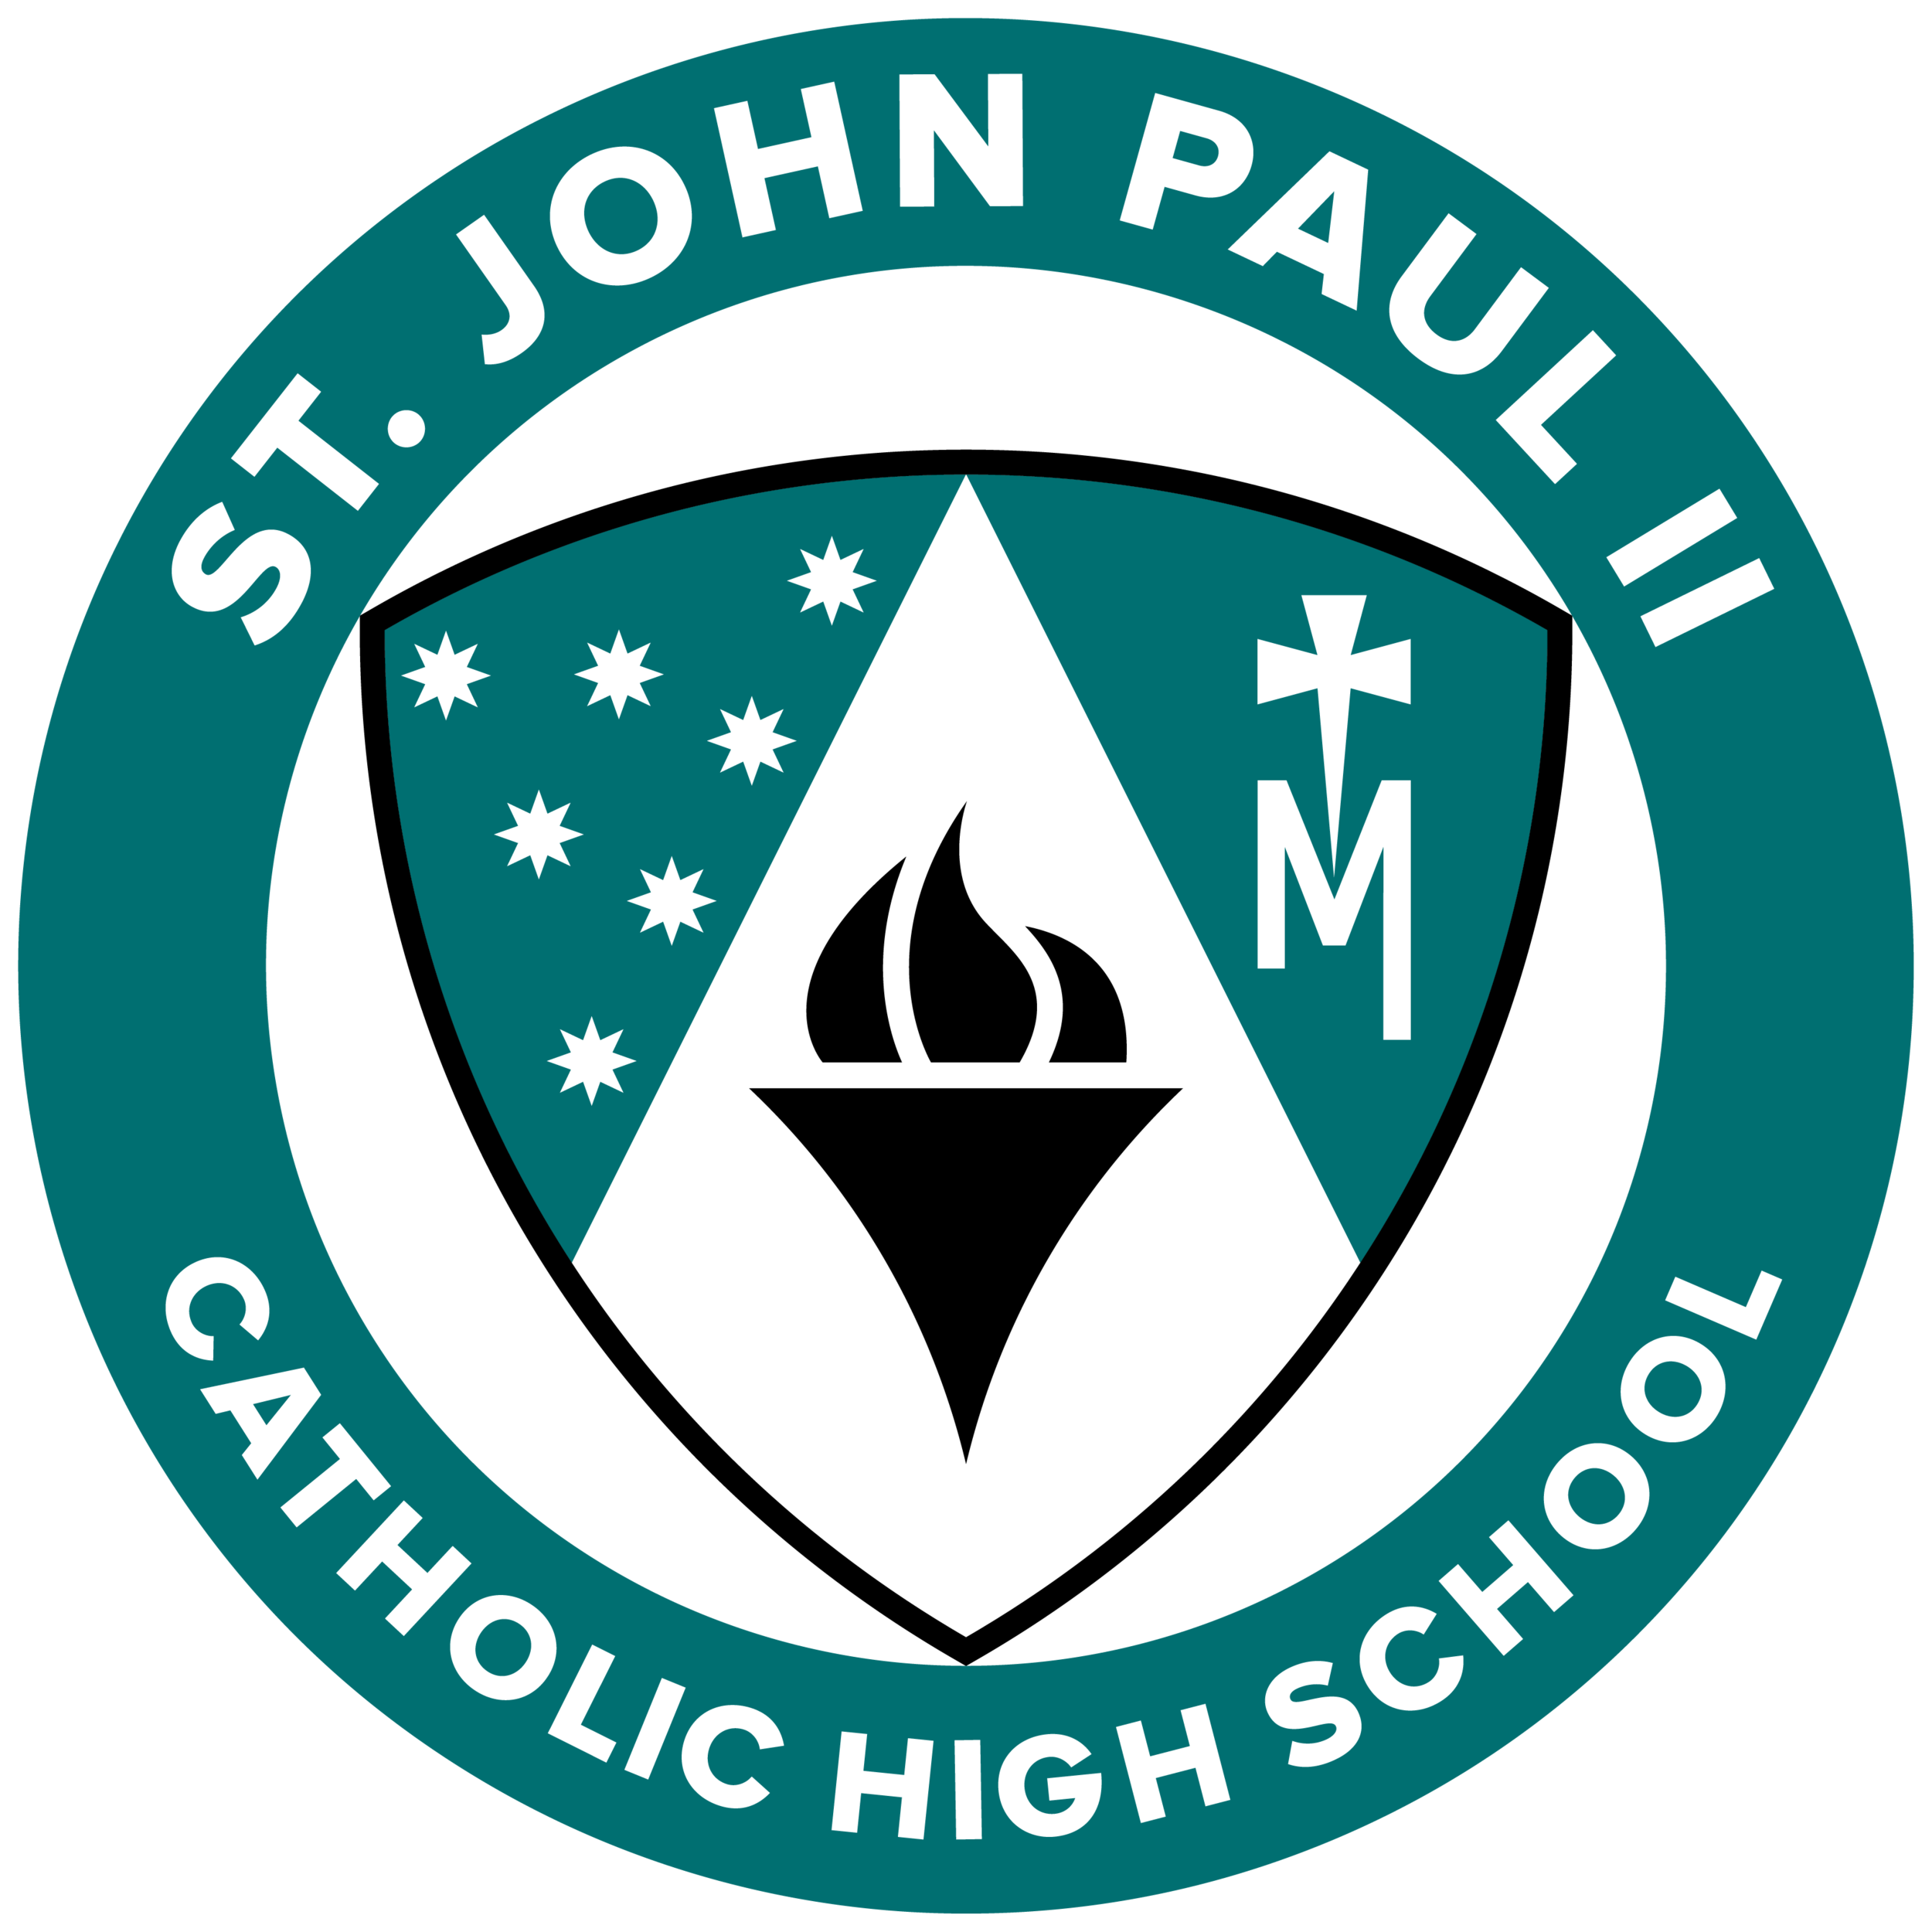 St. John Paul II Catholic High School